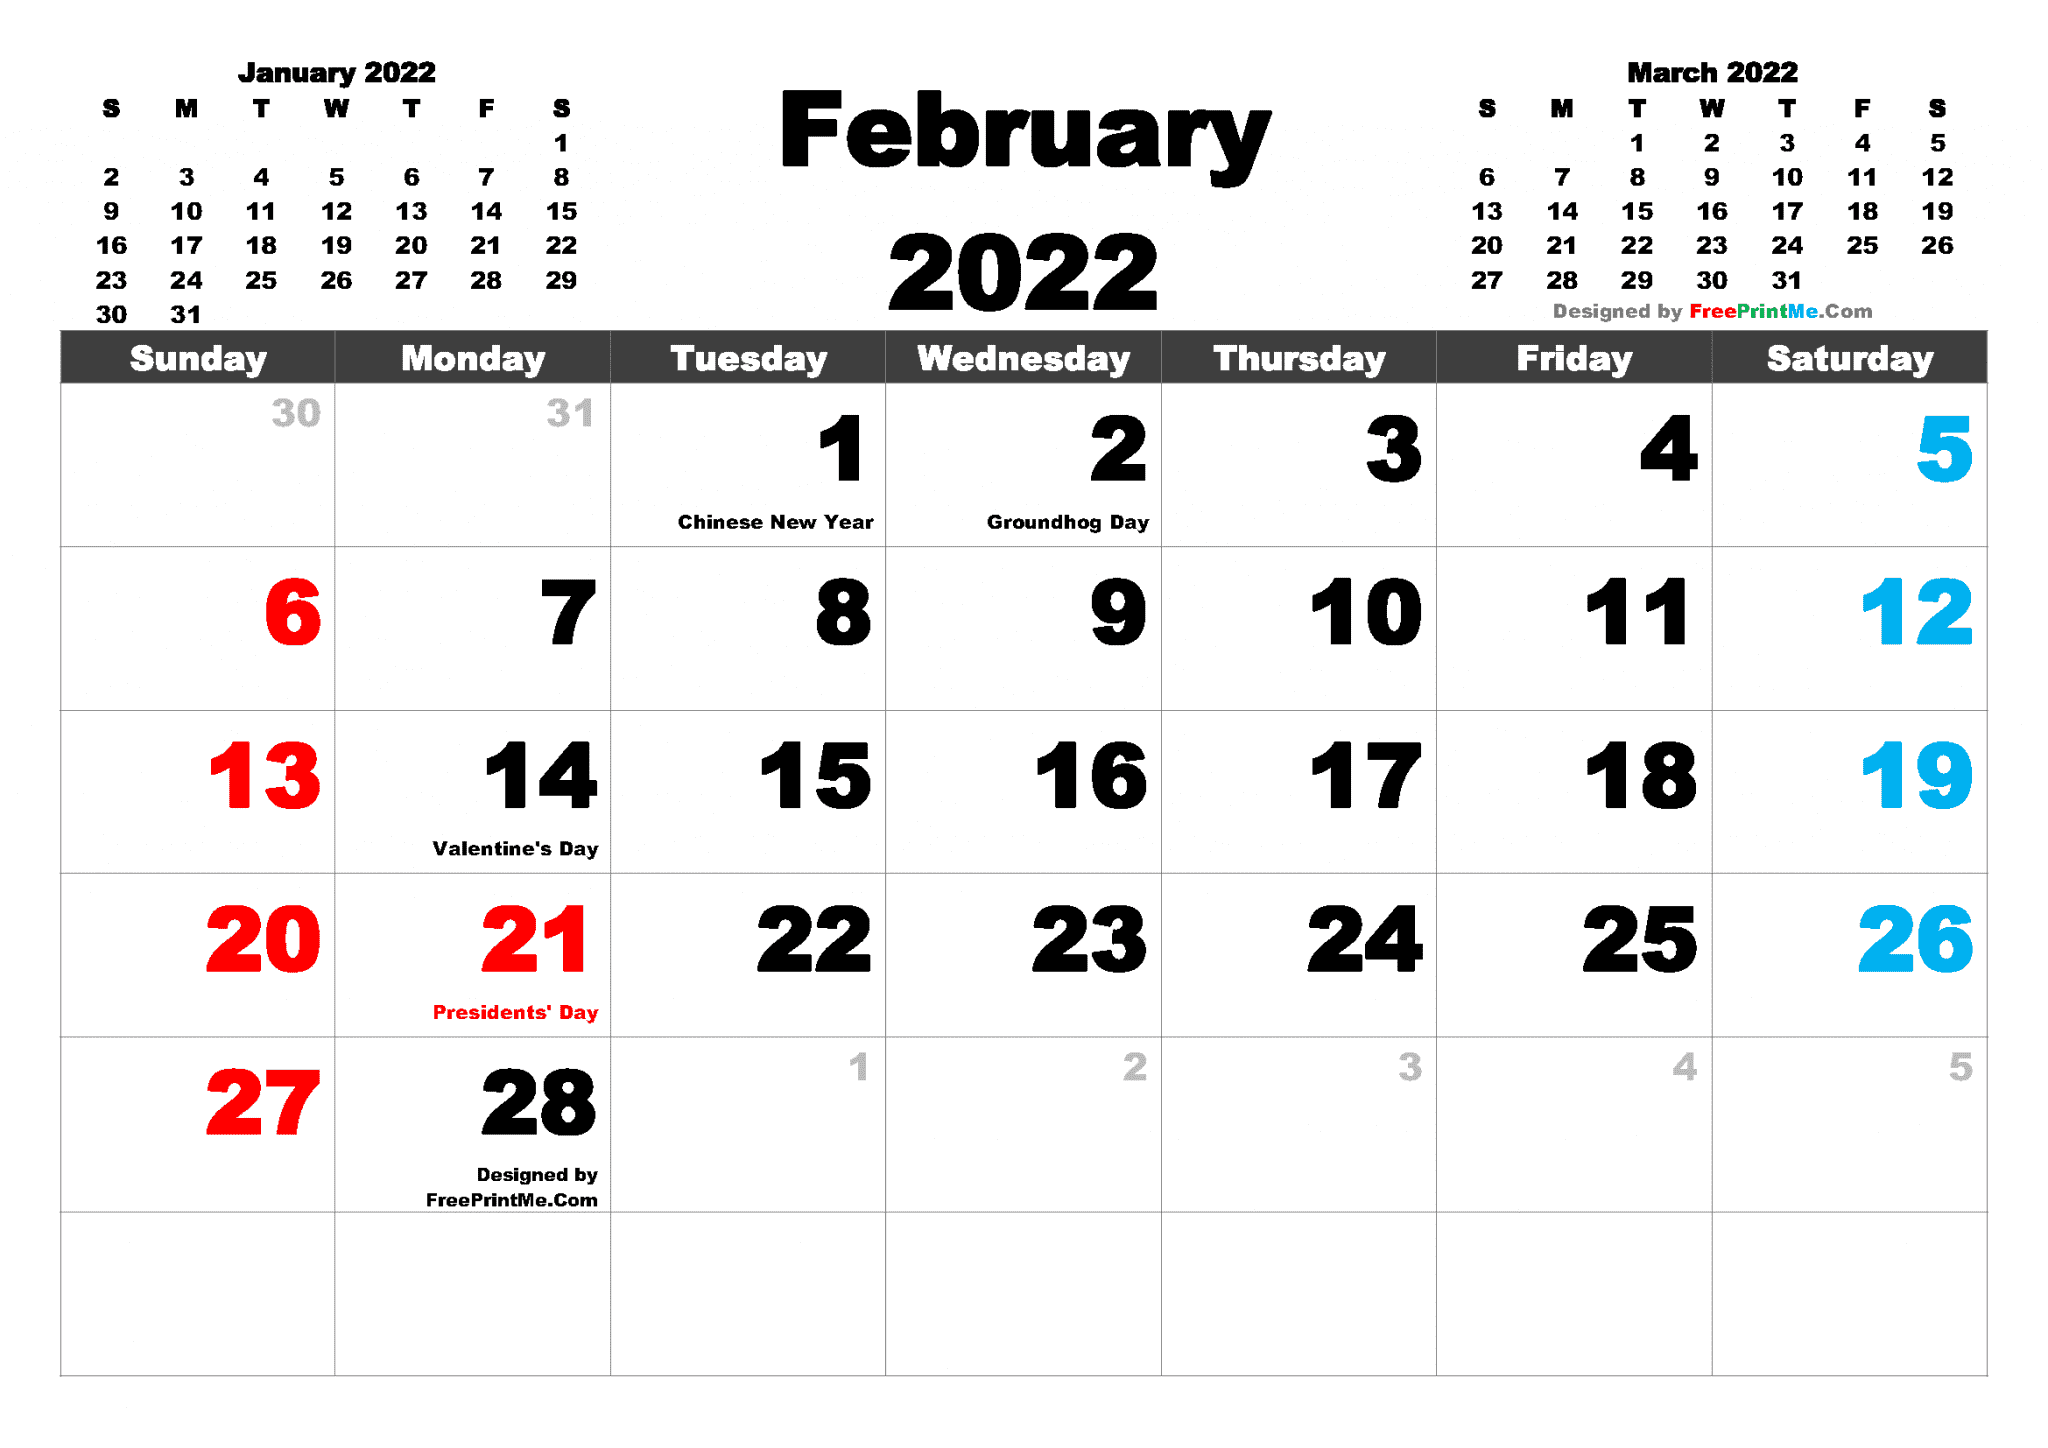 February 2022 Calendar February 2022 Free Printables - Riset